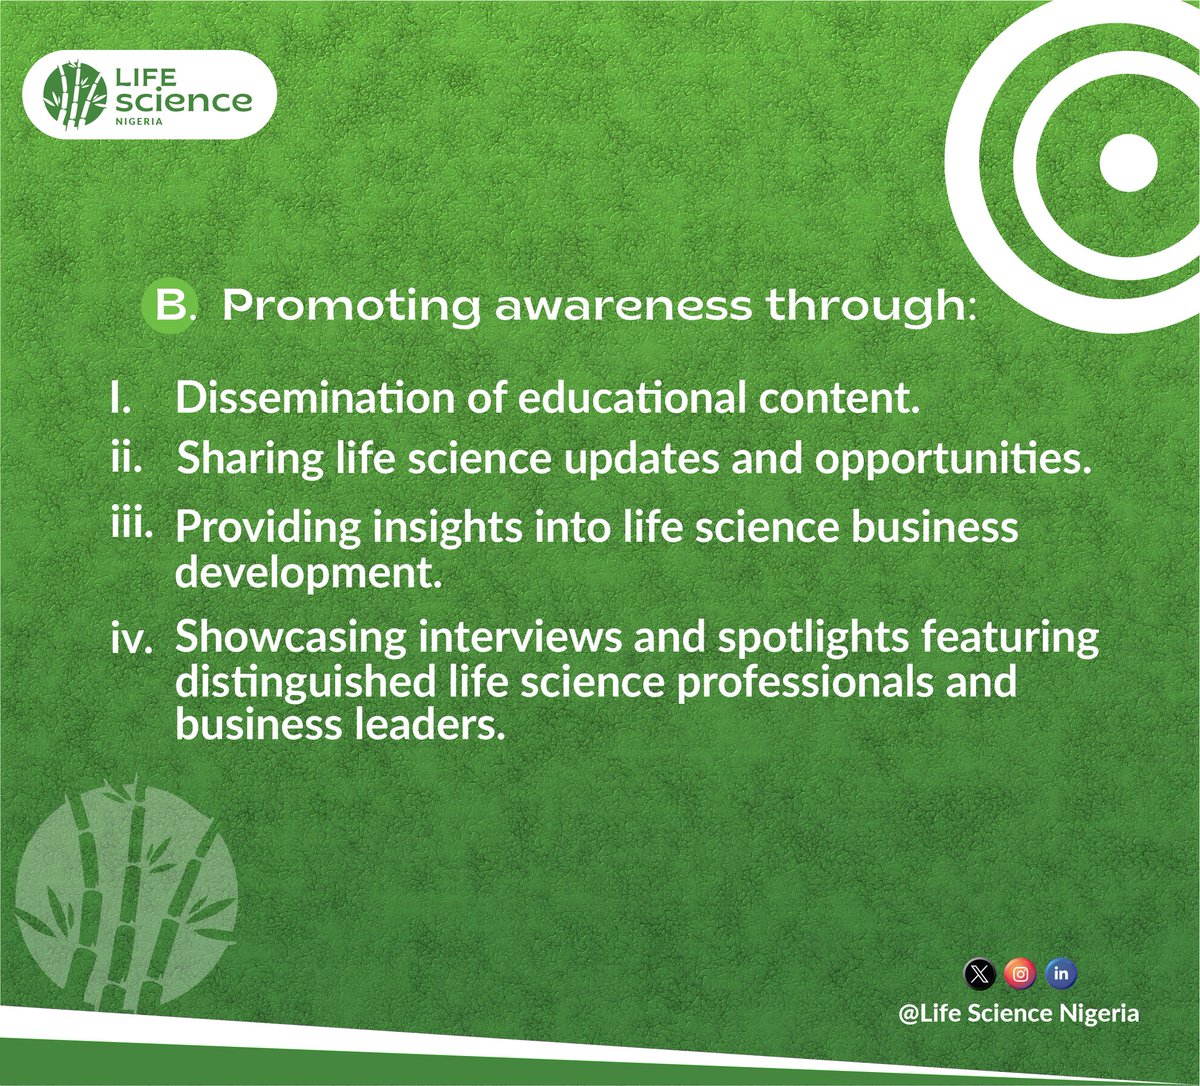 #lifesciences 
#researchers 
#lifesciencenigeria